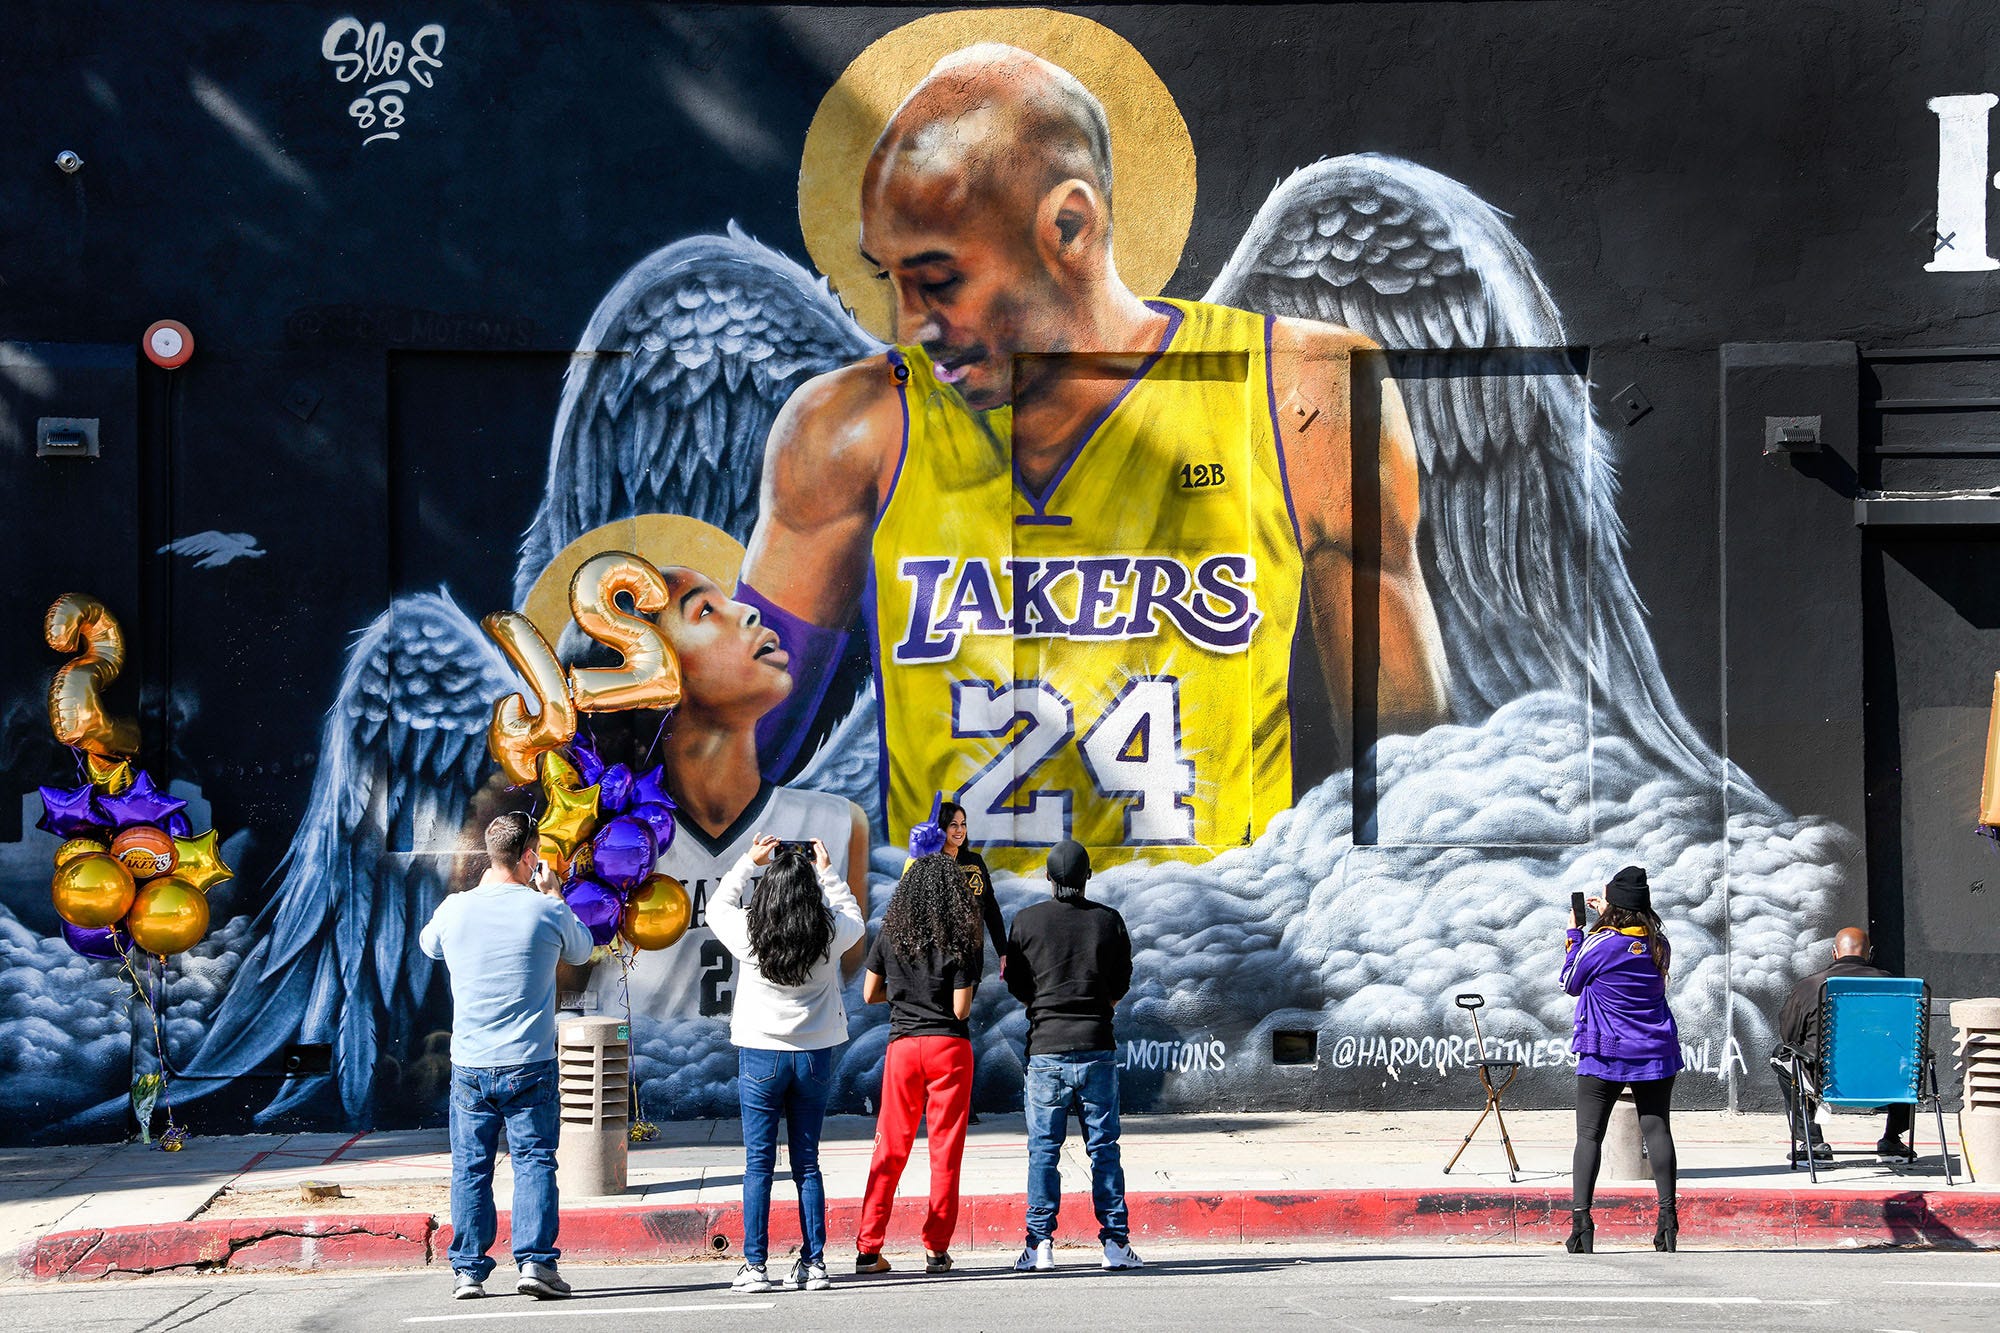 Kobe & Gianna Bryant Murals on X: The Lakers classic blue jerseys